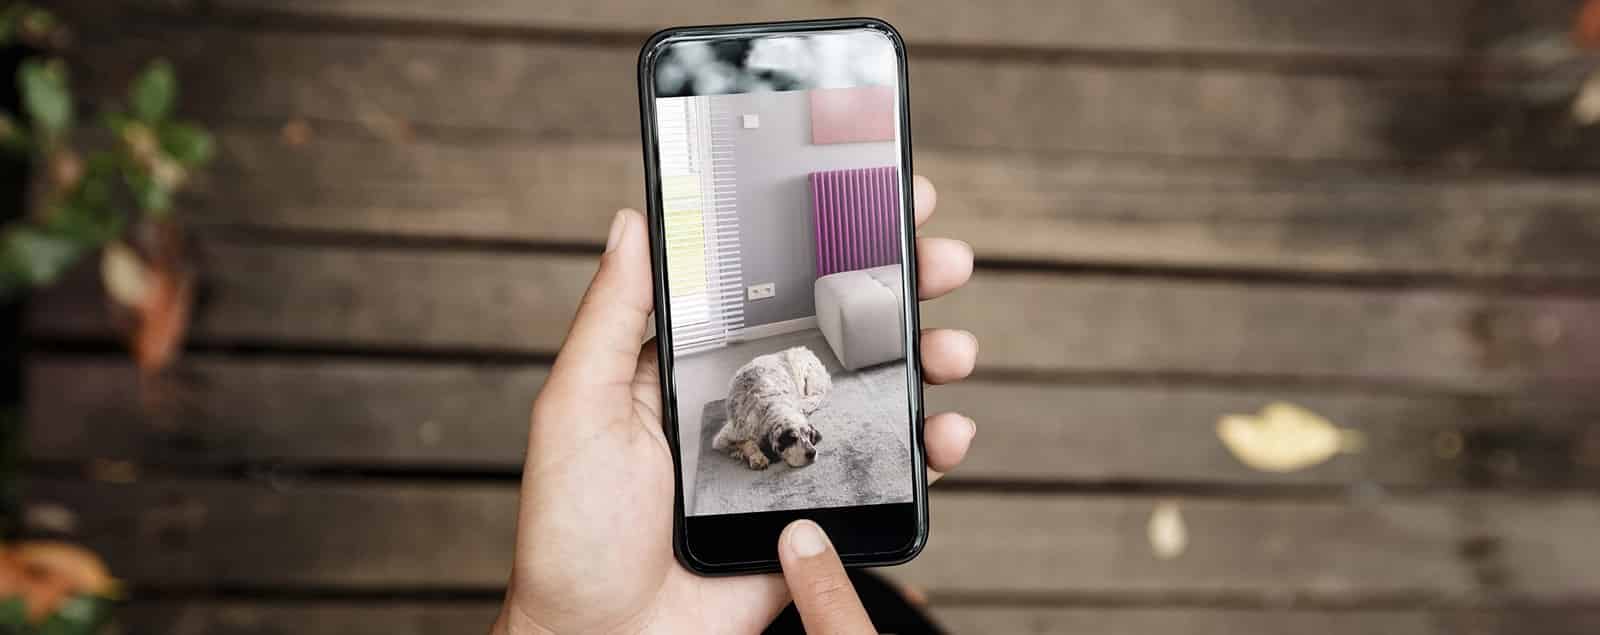 Smartphone in hands showing image of dog sleeping on rug